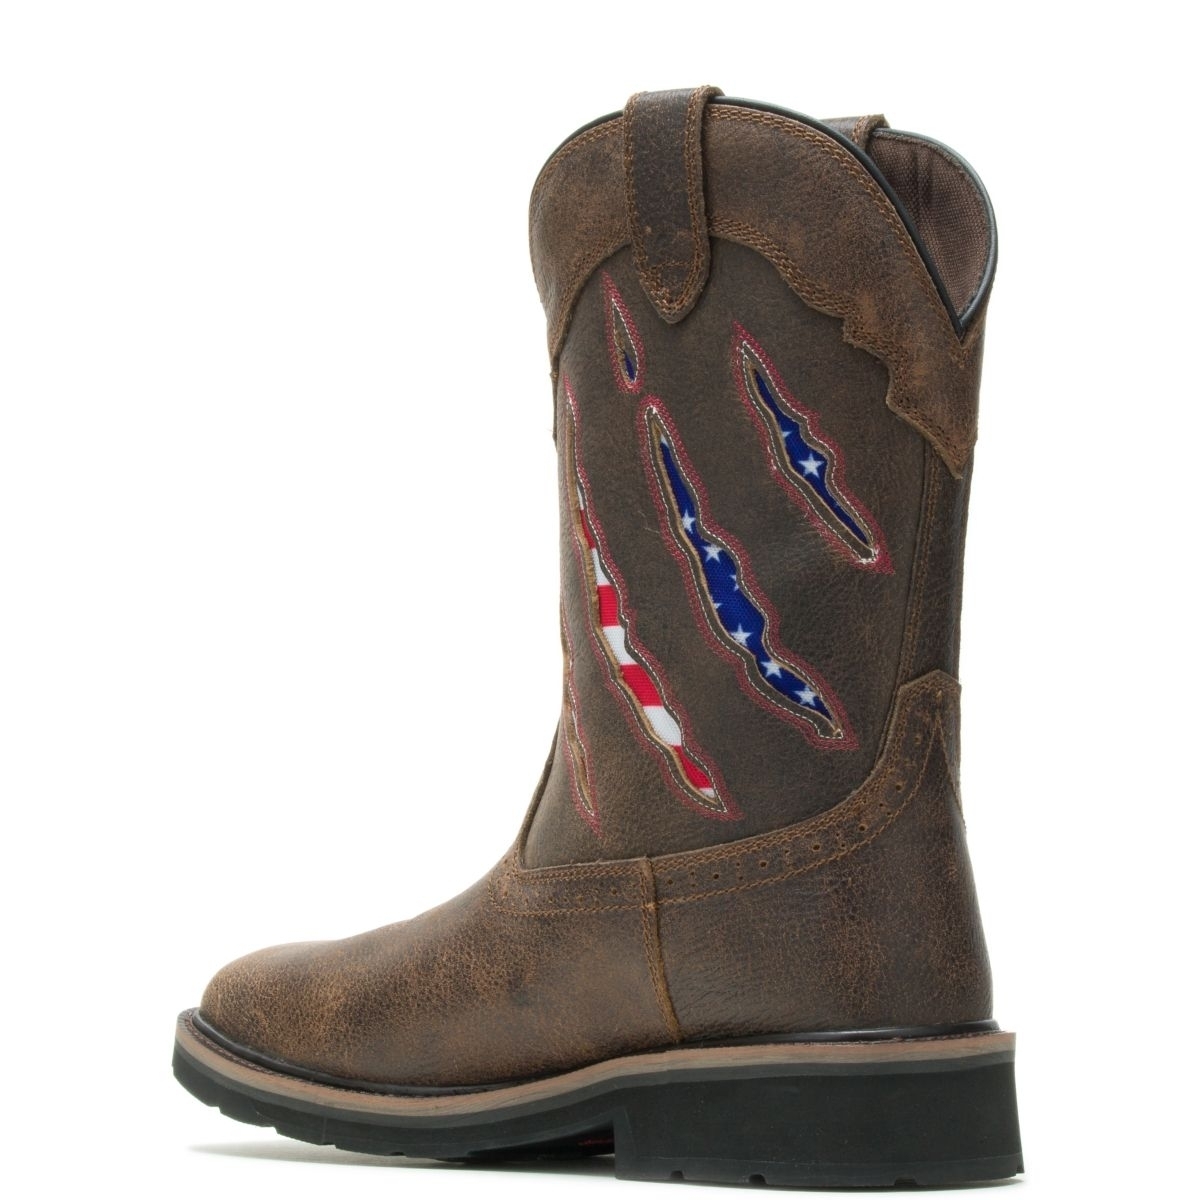 WOLVERINE Men's Rancher Claw Steel Toe Wellington Work Boot Brown/Flag - W201218 Flag/brown - Flag/brown, 9-W